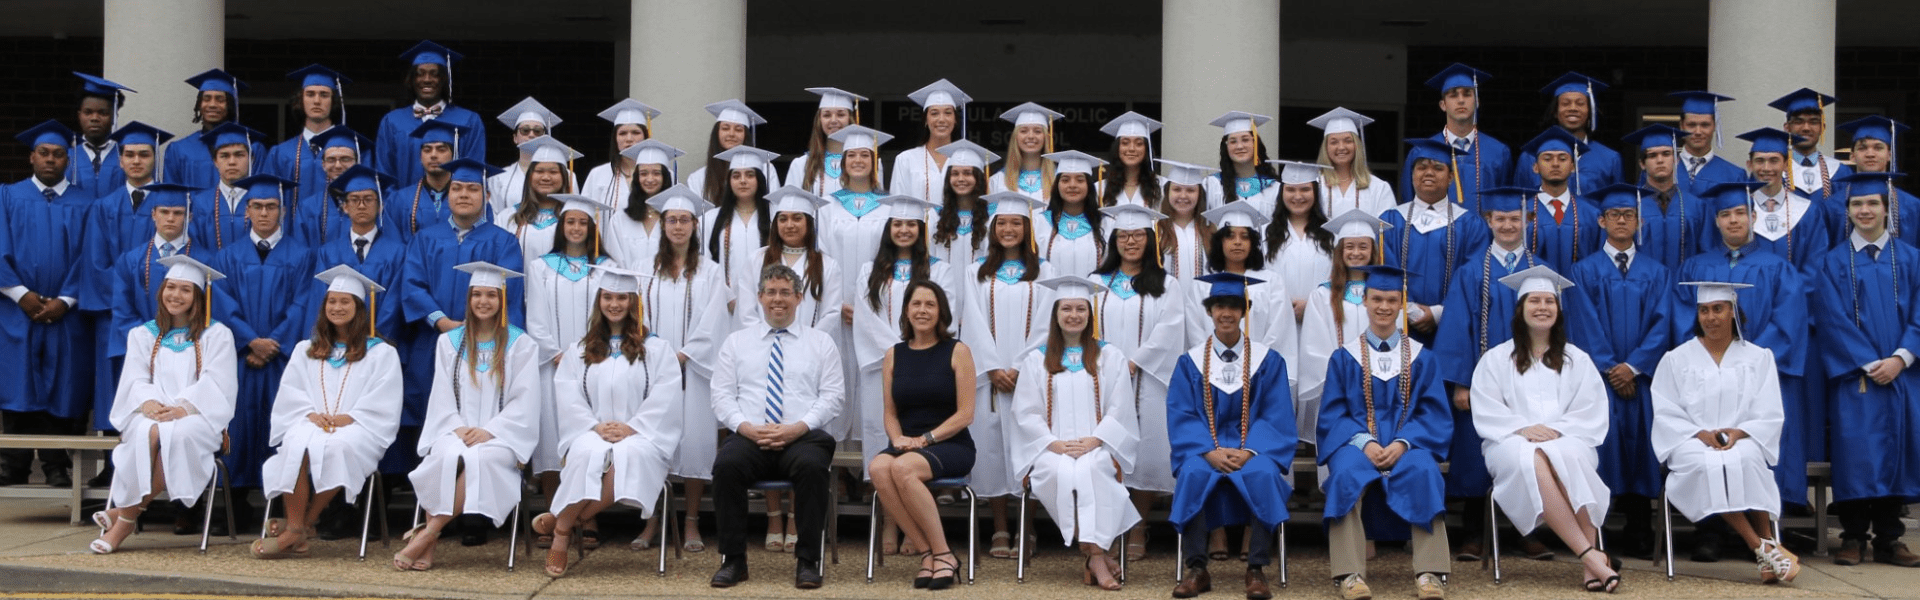 Graduates from Peninsula Catholic High School